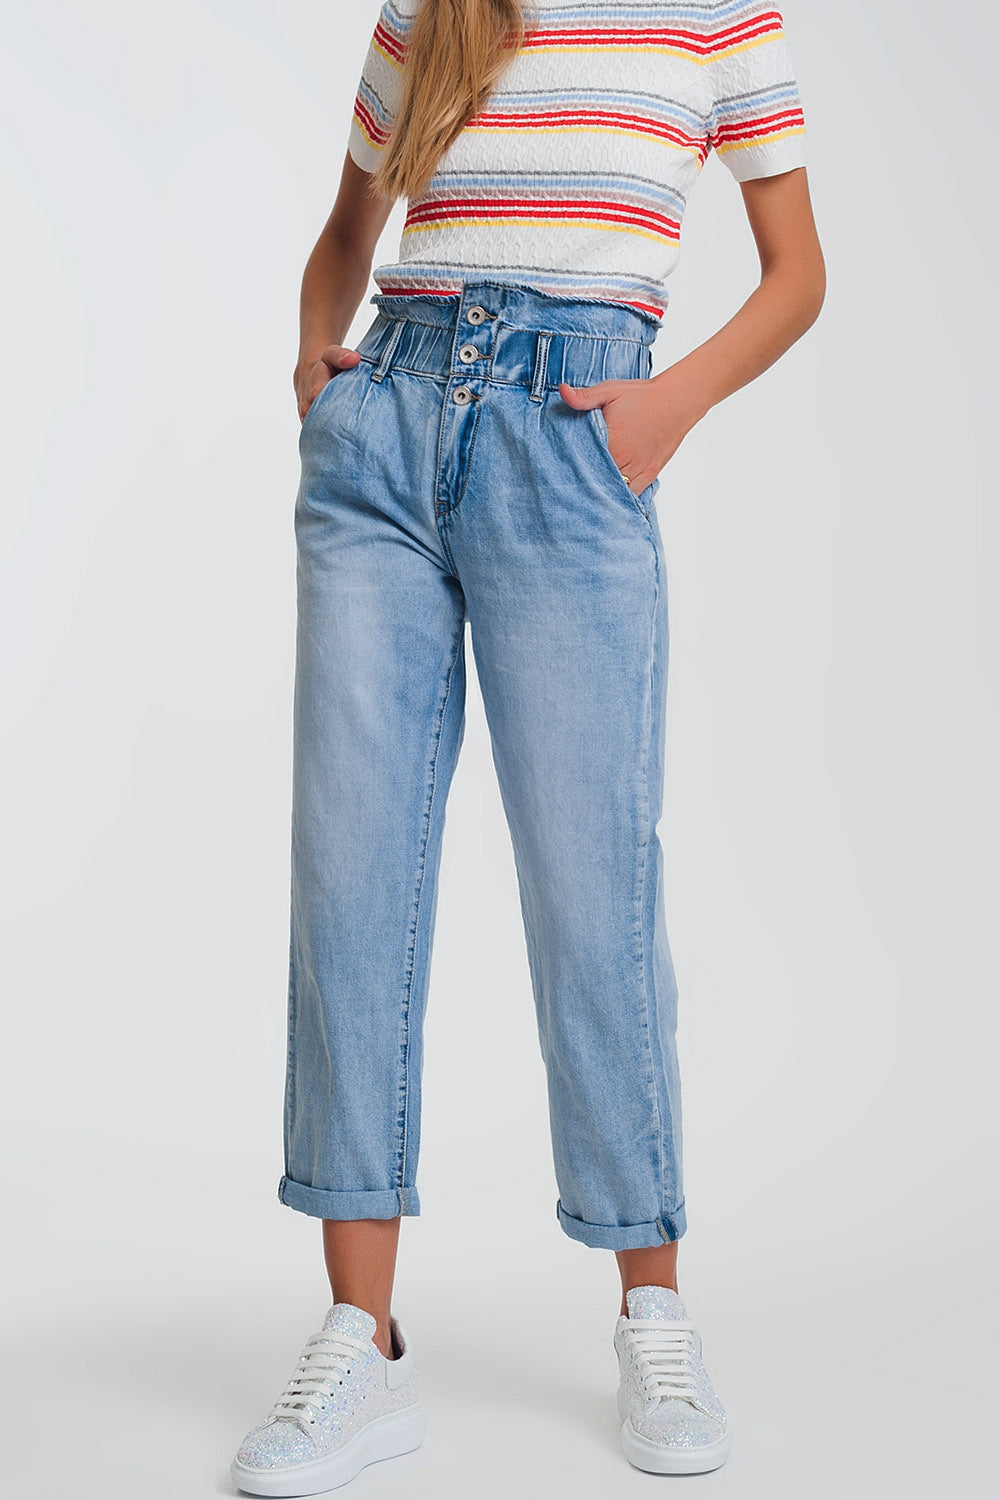 Q2 Light denim straight jeans with big waistband detail